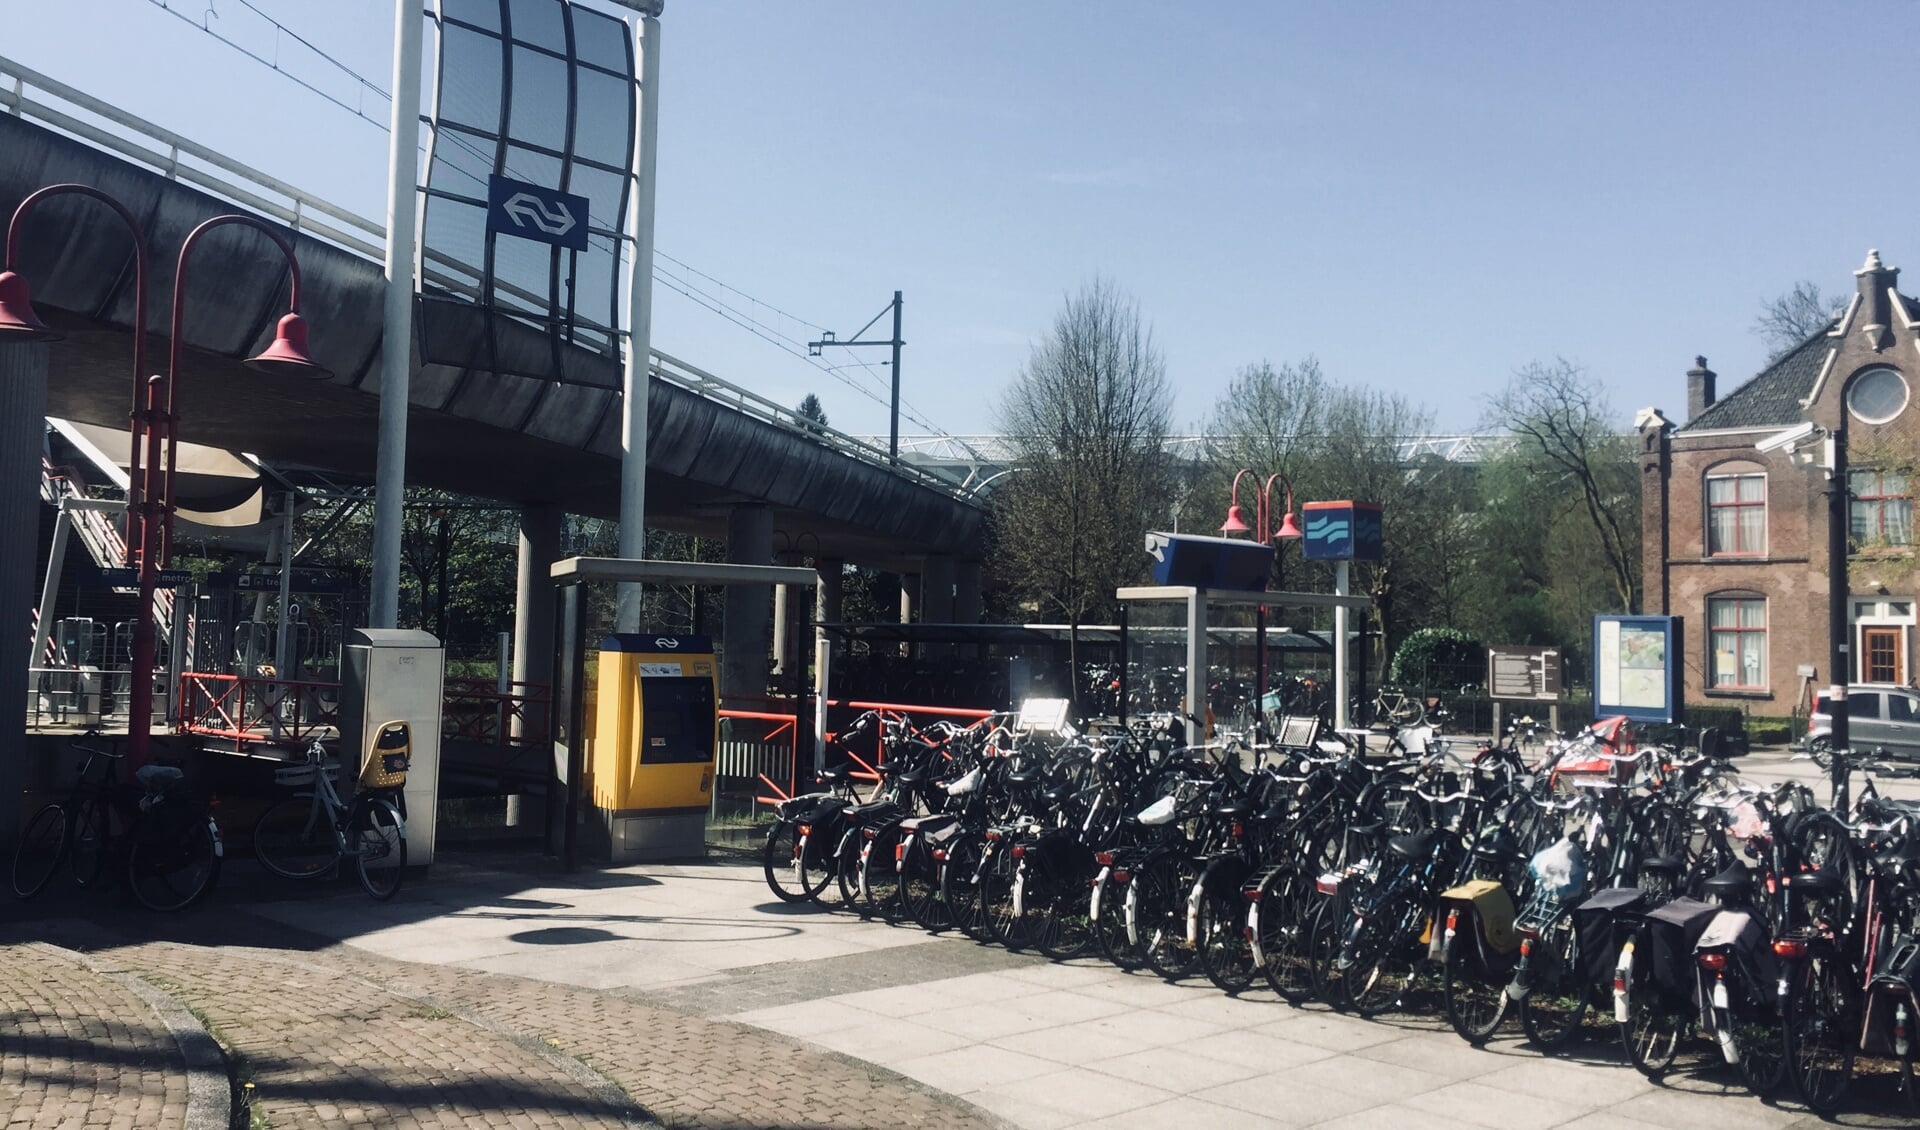 Station Duivendrecht.